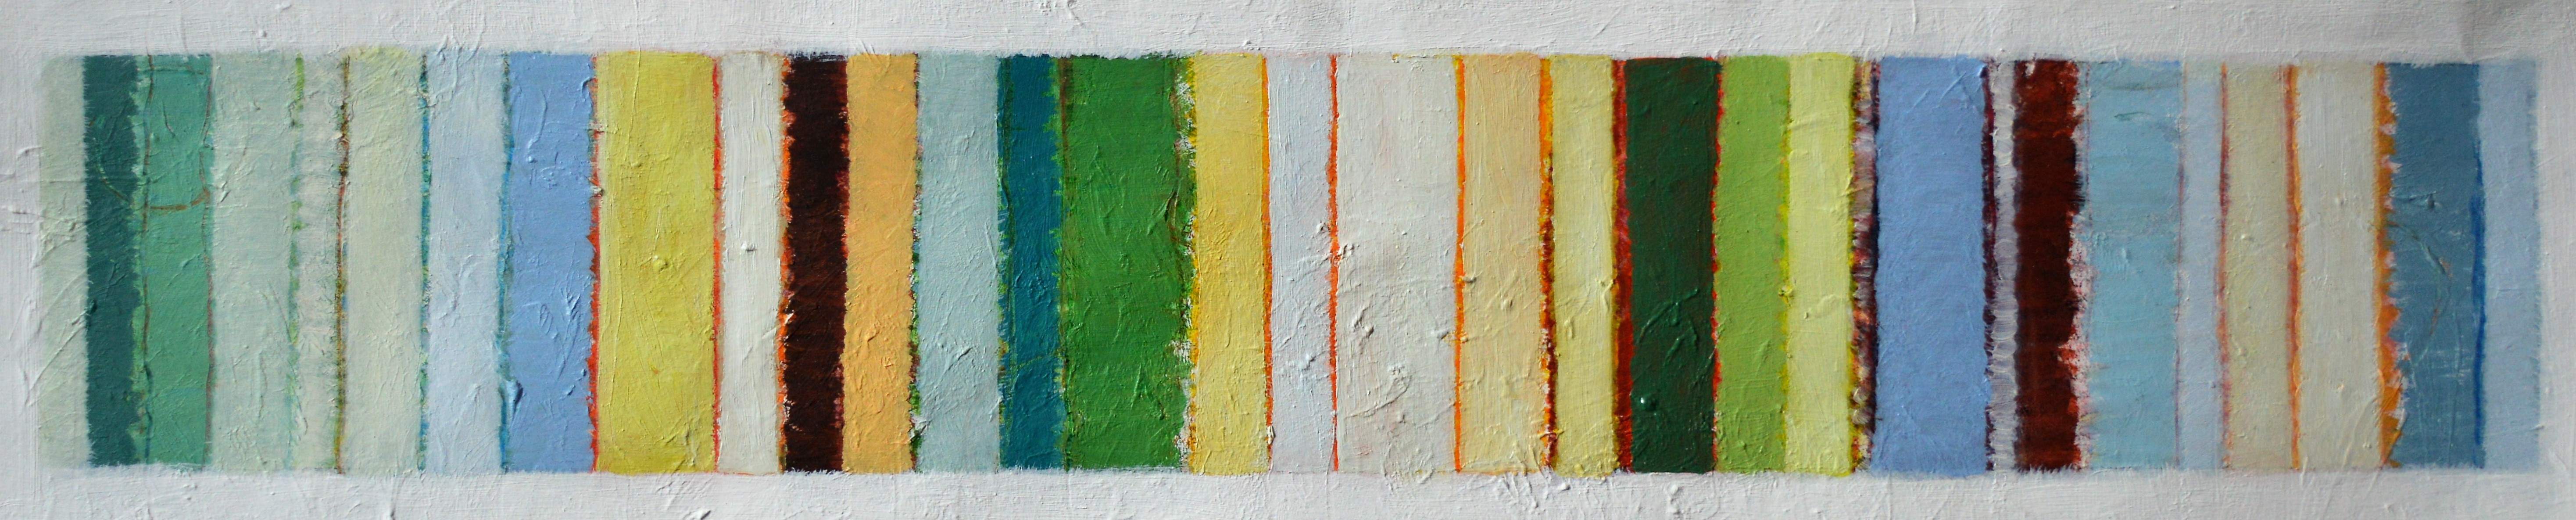 'Patterning # 6' 2020. Crayon, oil on paper. 58cm x 20cm.